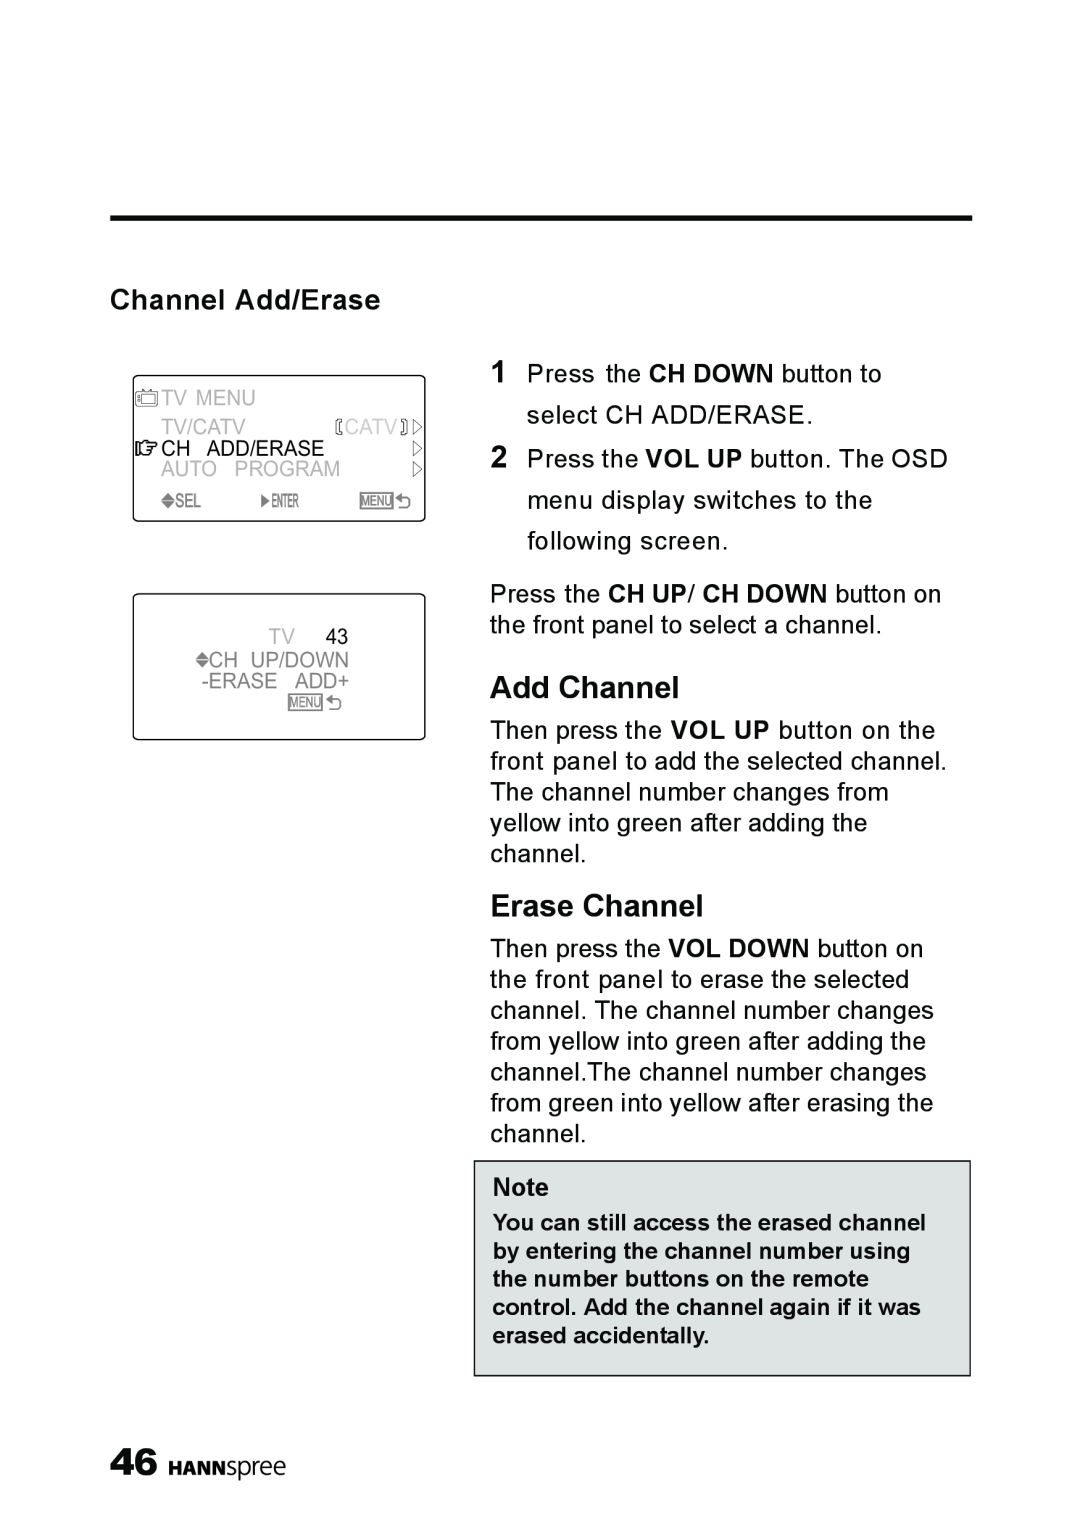 HANNspree ST09-10A1 user manual Add Channel, Erase Channel, Channel Add/Erase 